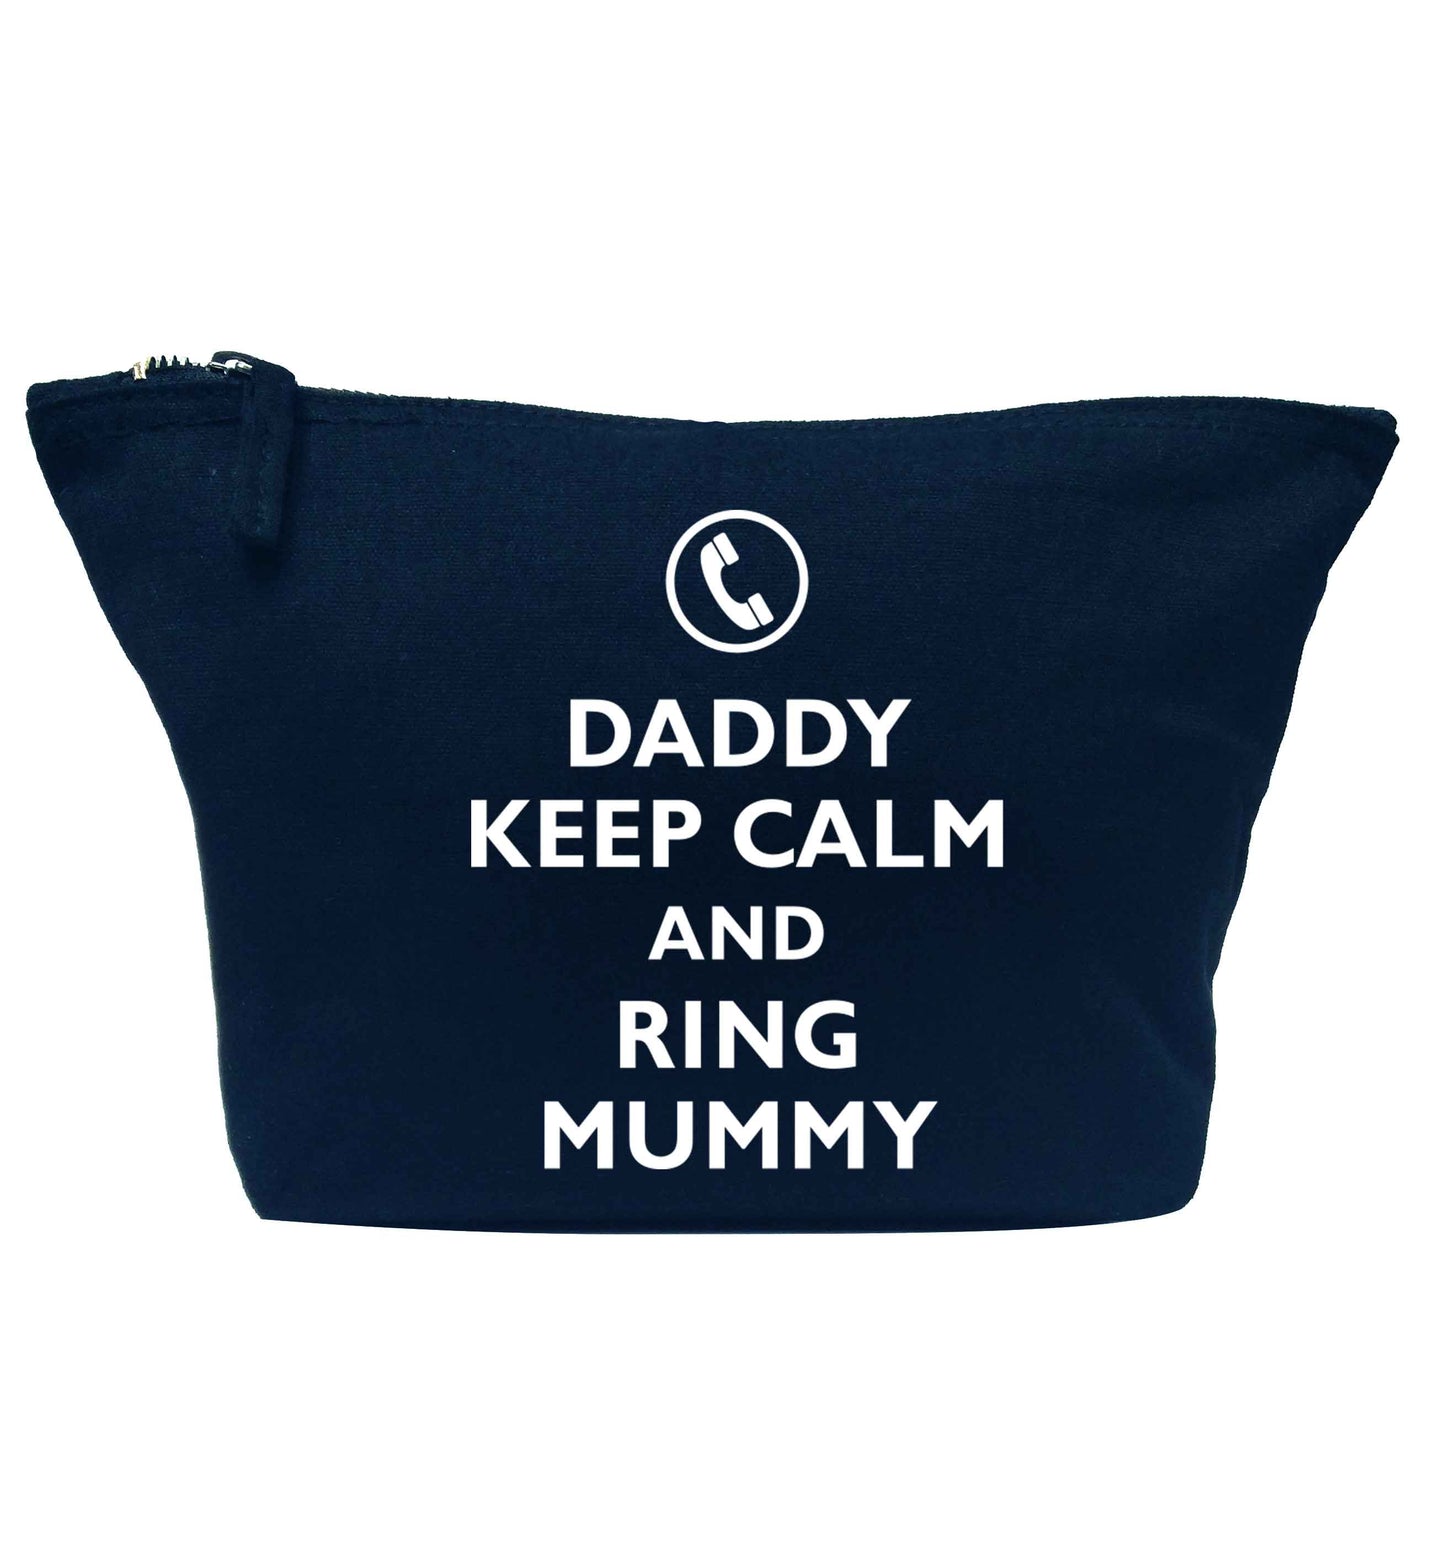 Daddy keep calm and ring mummy navy makeup bag